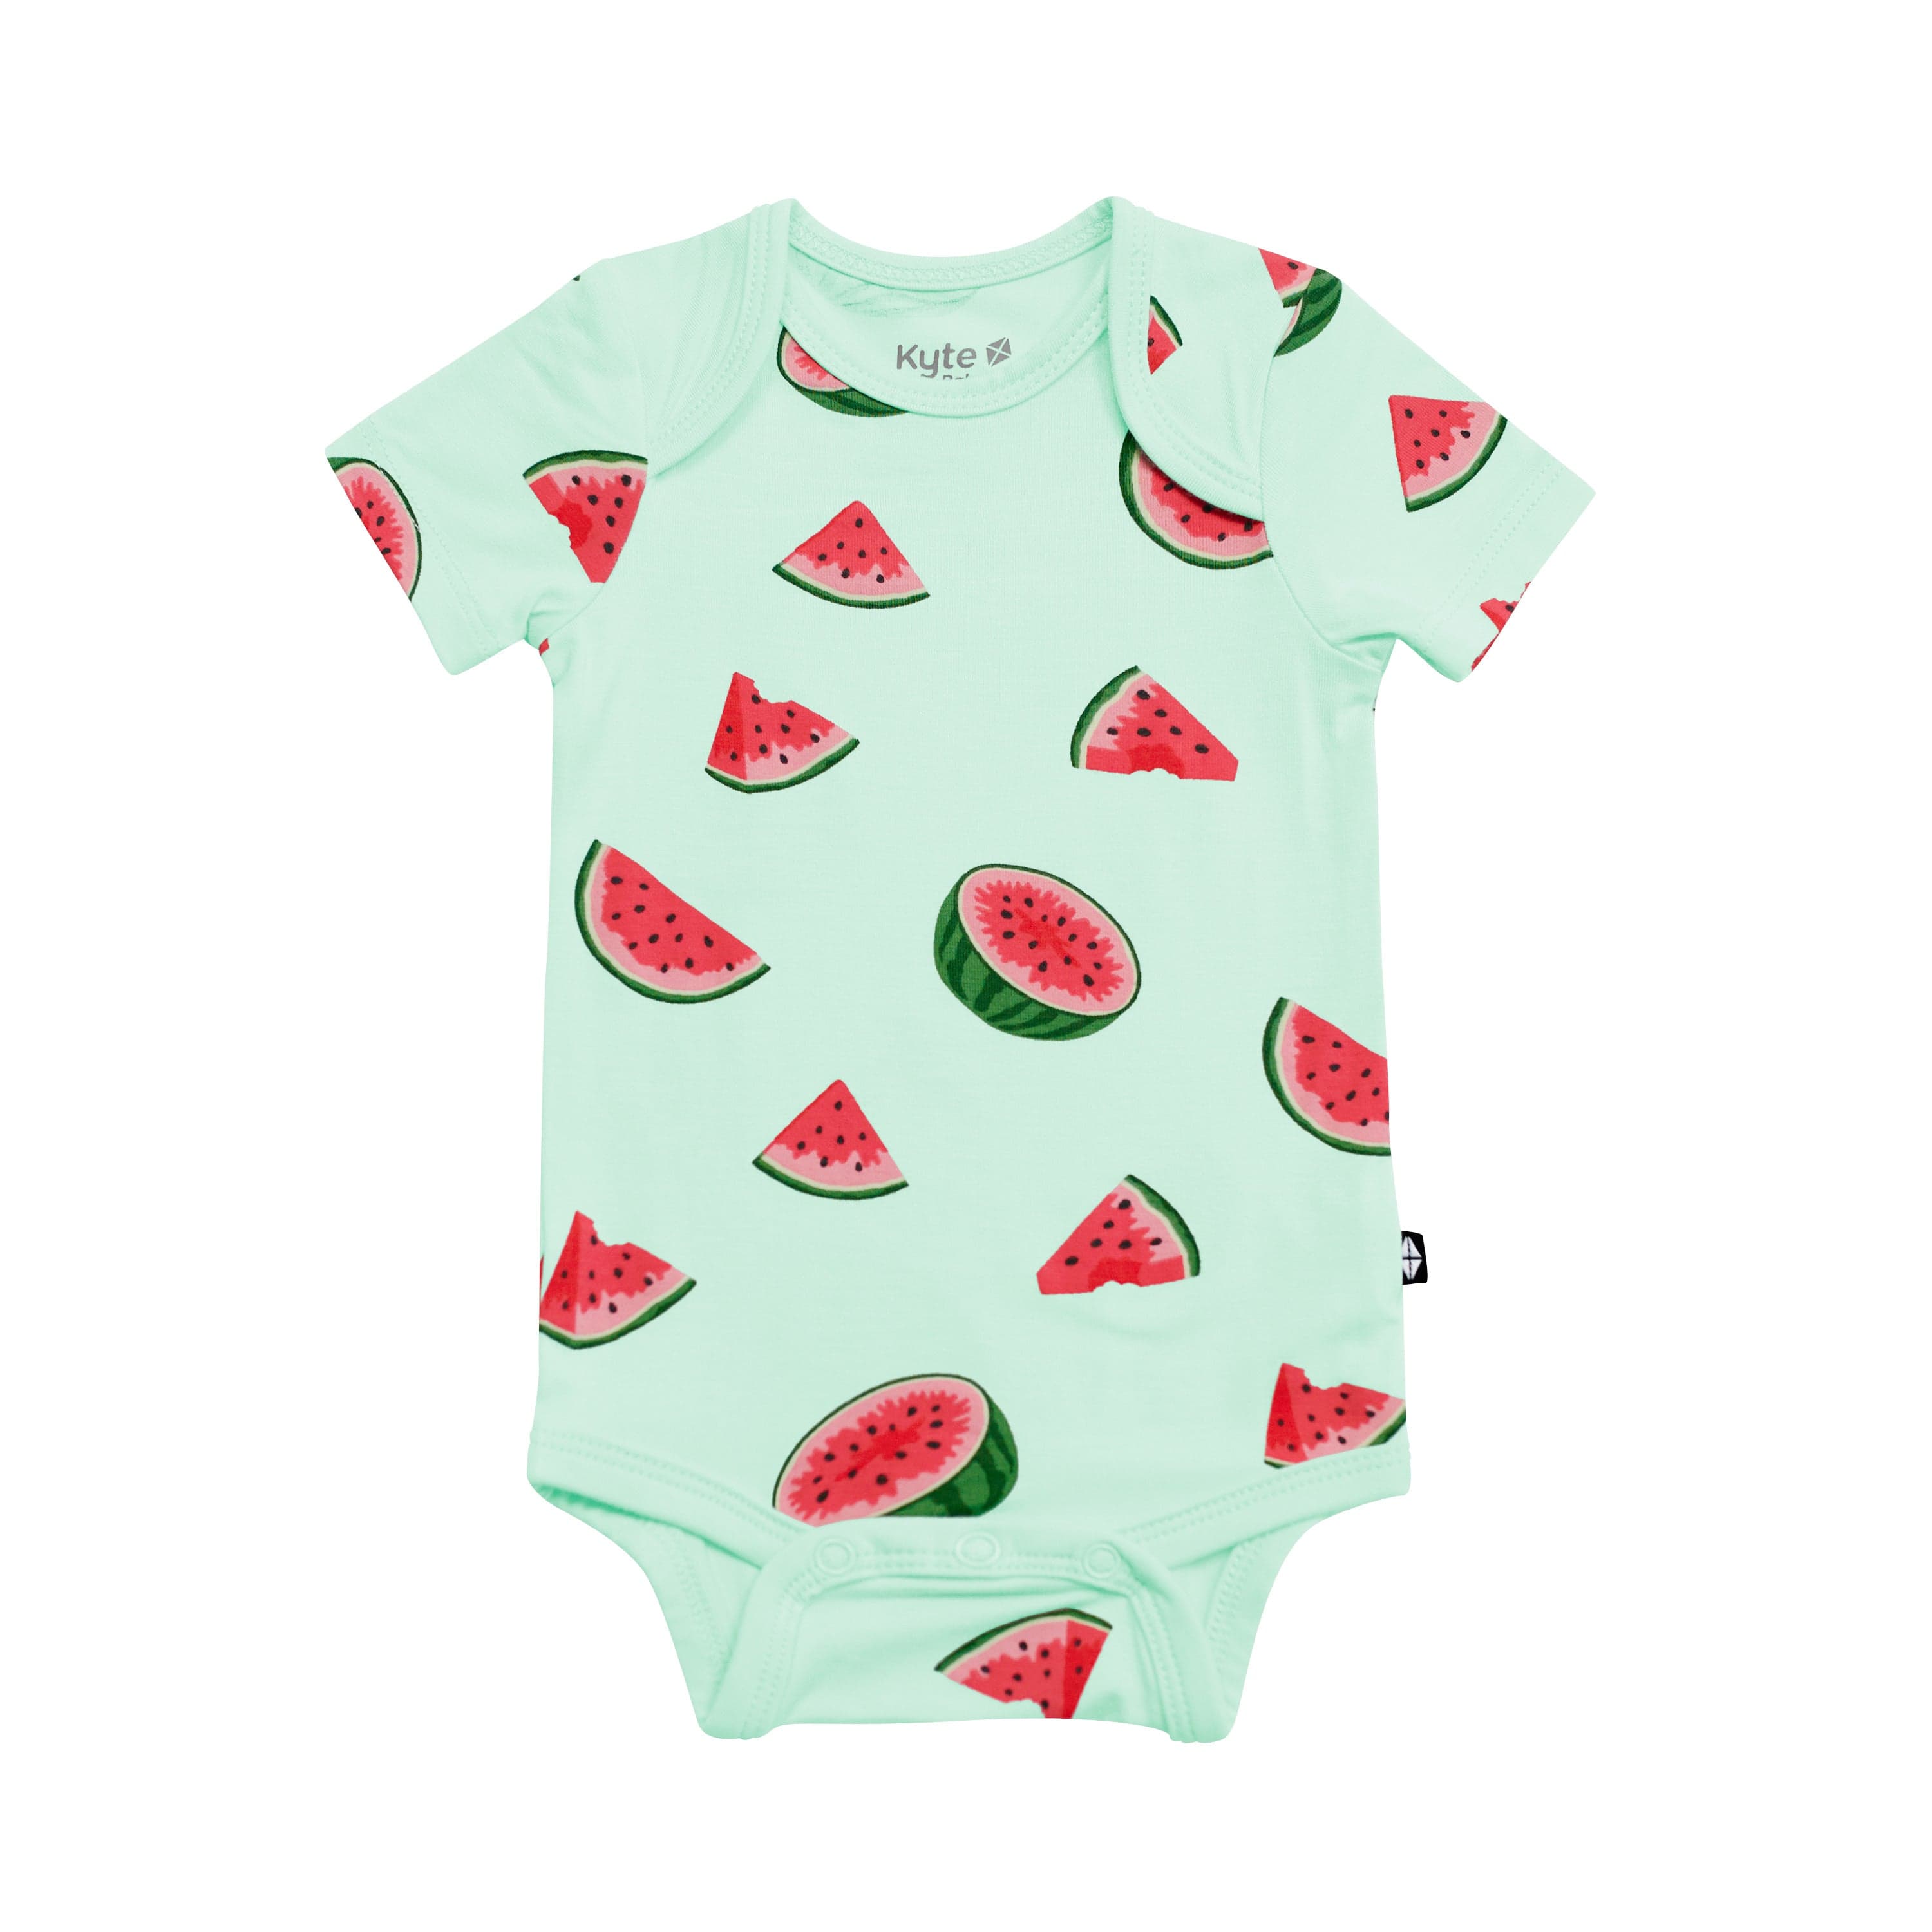 Kyte Baby Short Sleeve Bodysuits Bodysuit in Watermelon